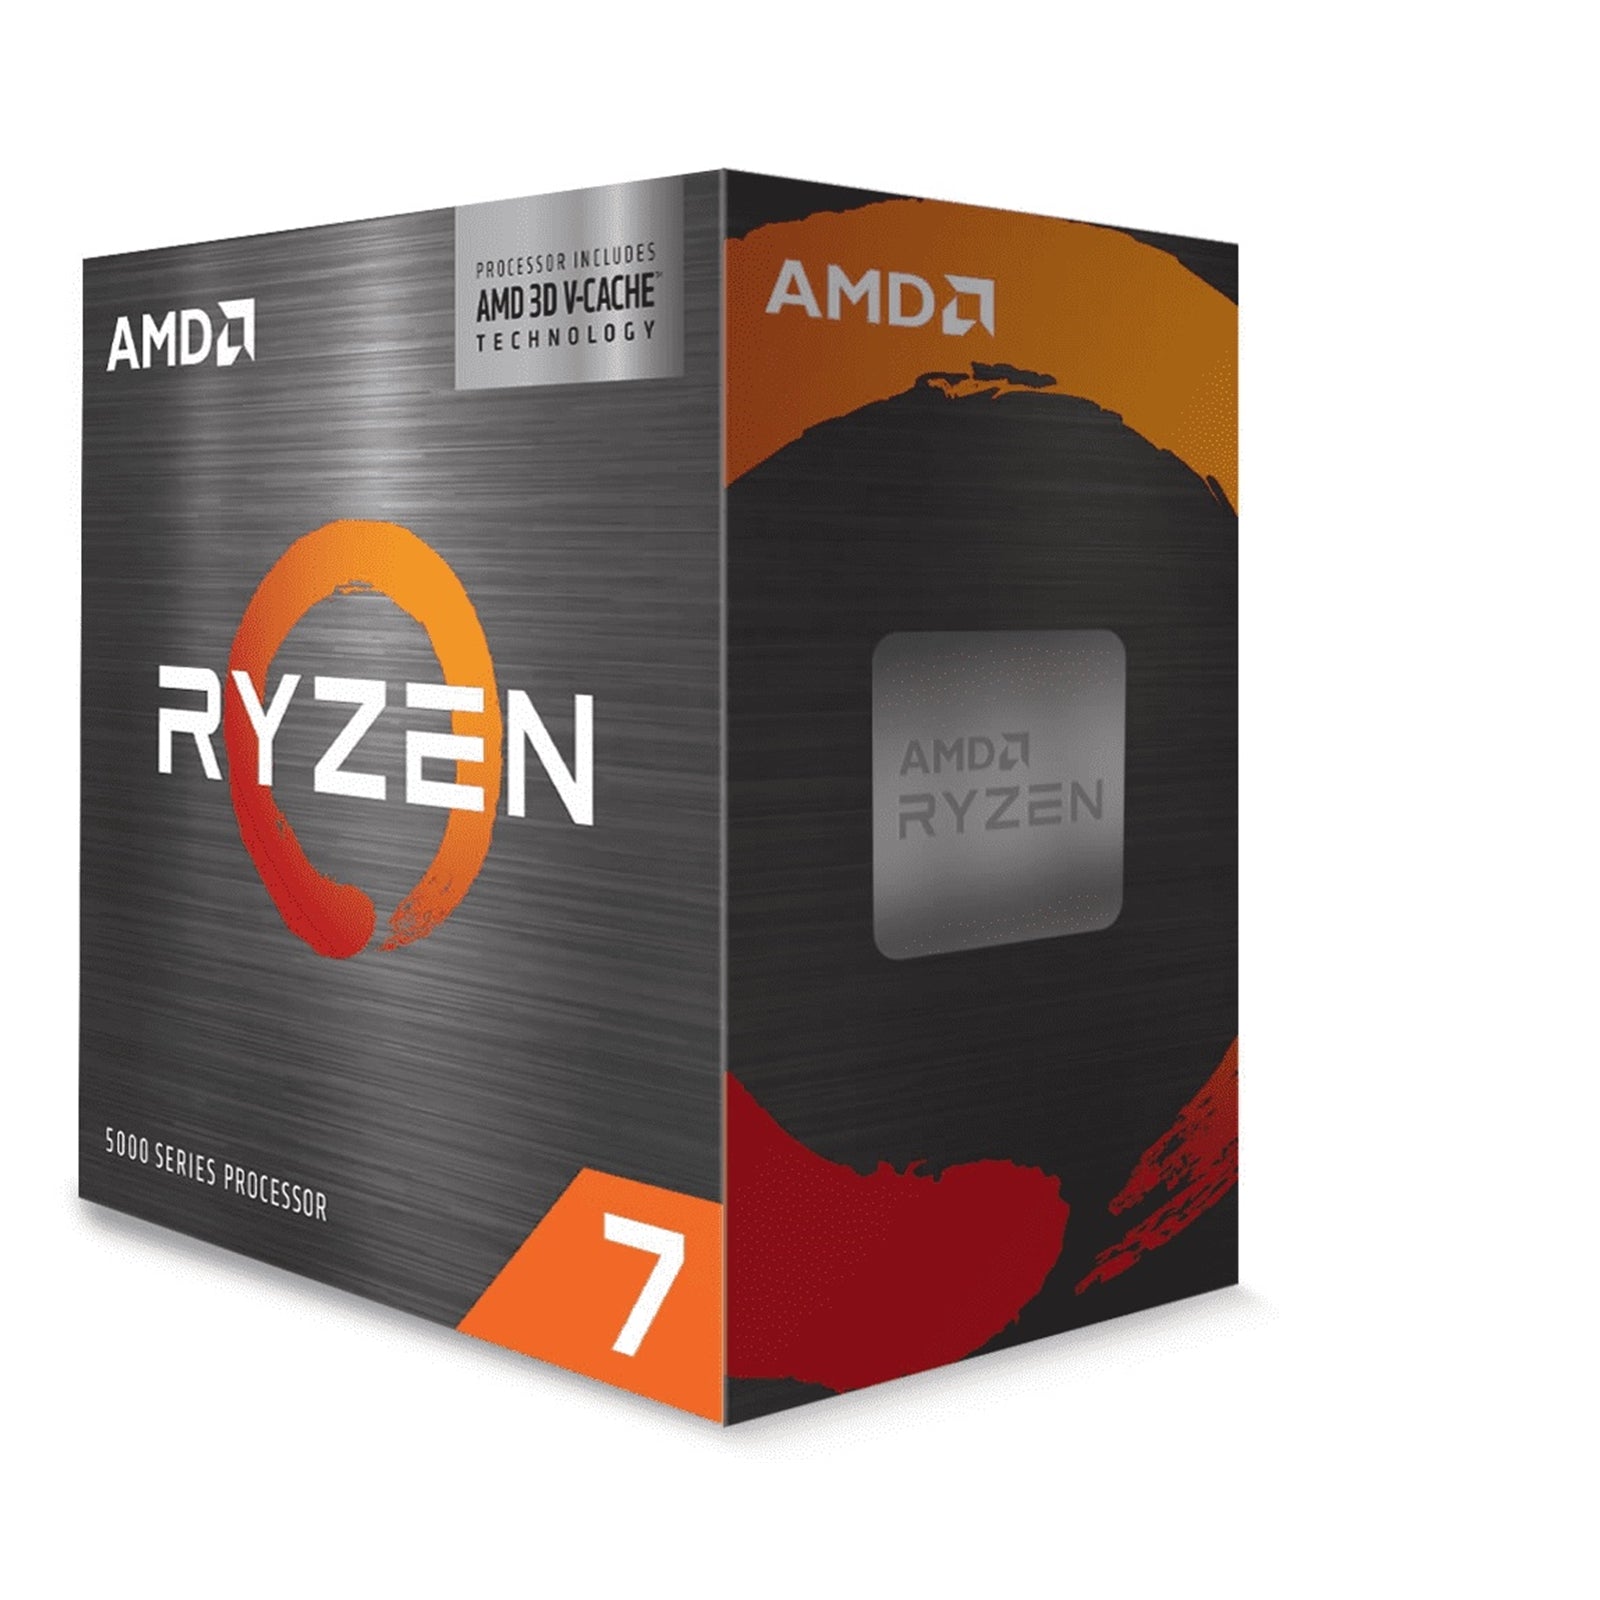 AMD Ryzen 7 5800X3D 8-Core Gaming Processor 3.4GHz, 16 Threads, 4.5GHz Boost, 96MB Cache